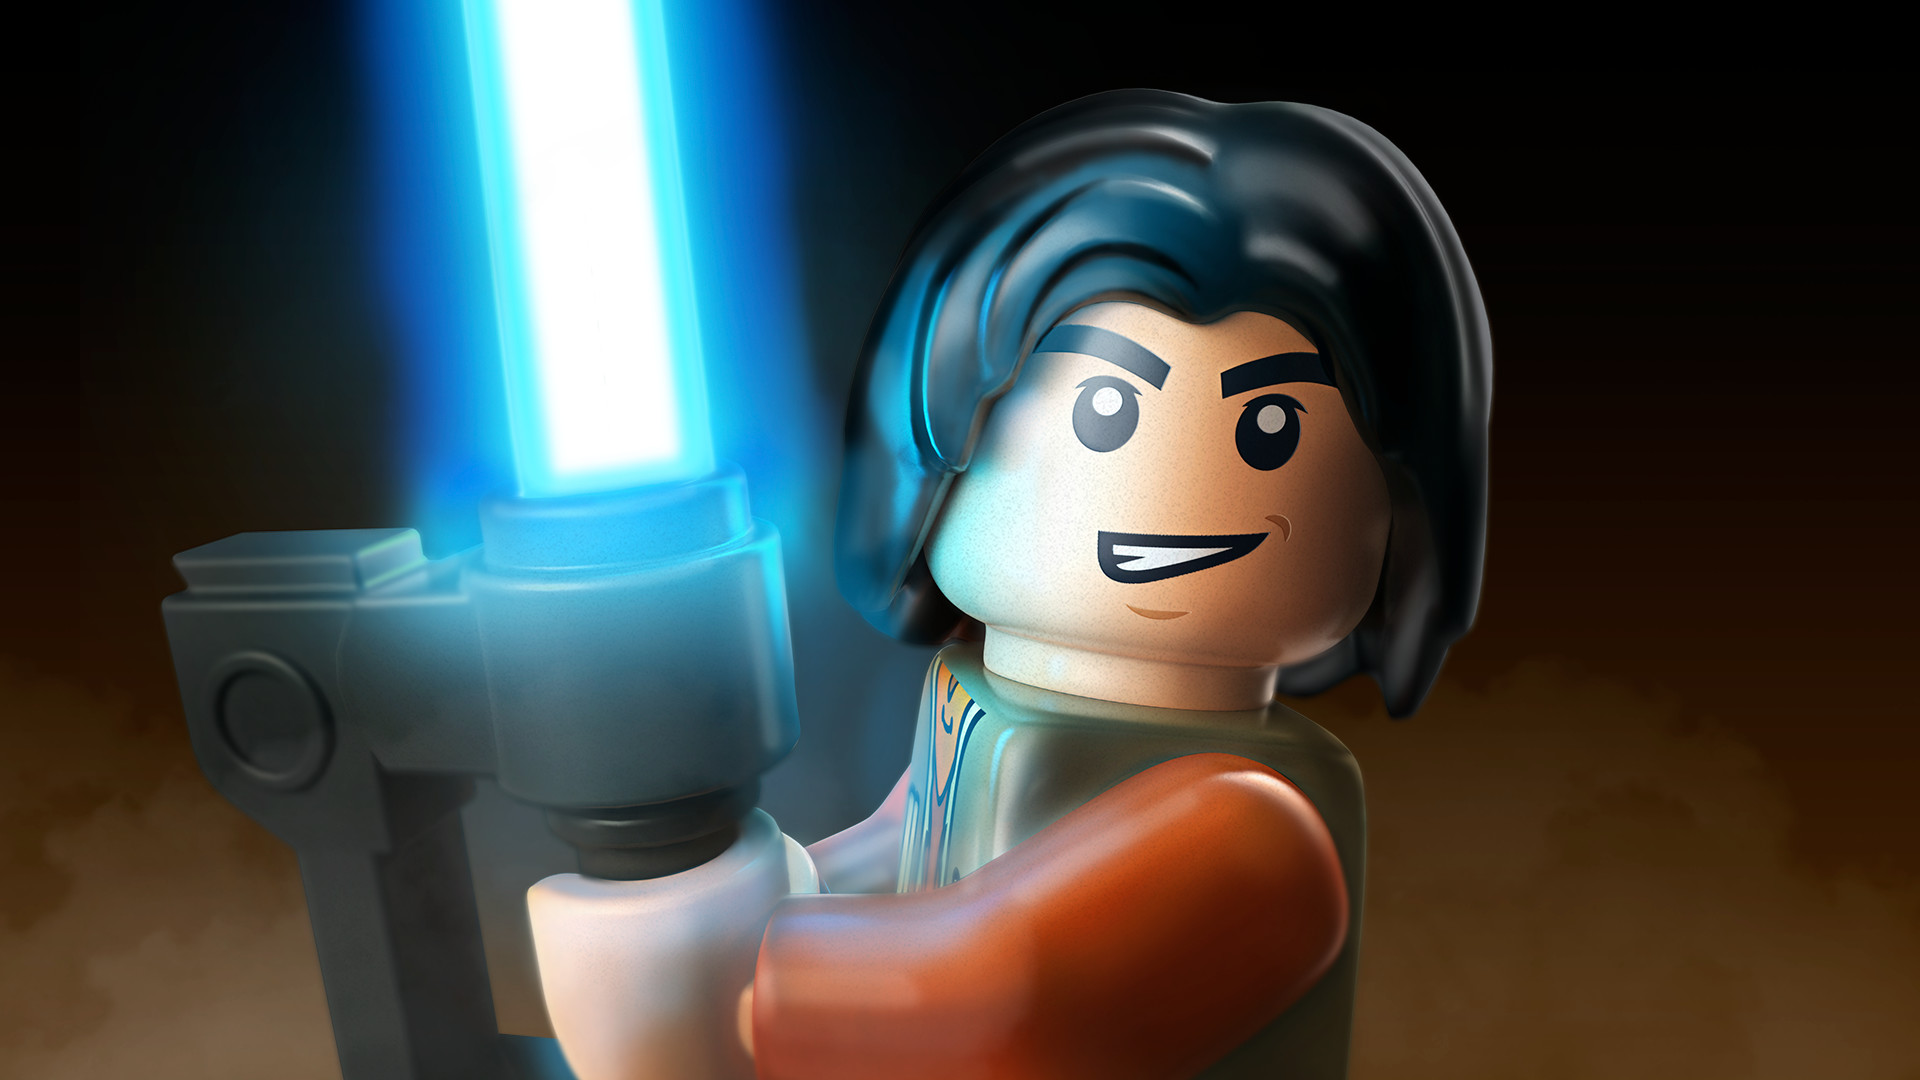 [$ 1.68] LEGO Star Wars: The Force Awakens - Rebels Character Pack DLC Steam CD Key